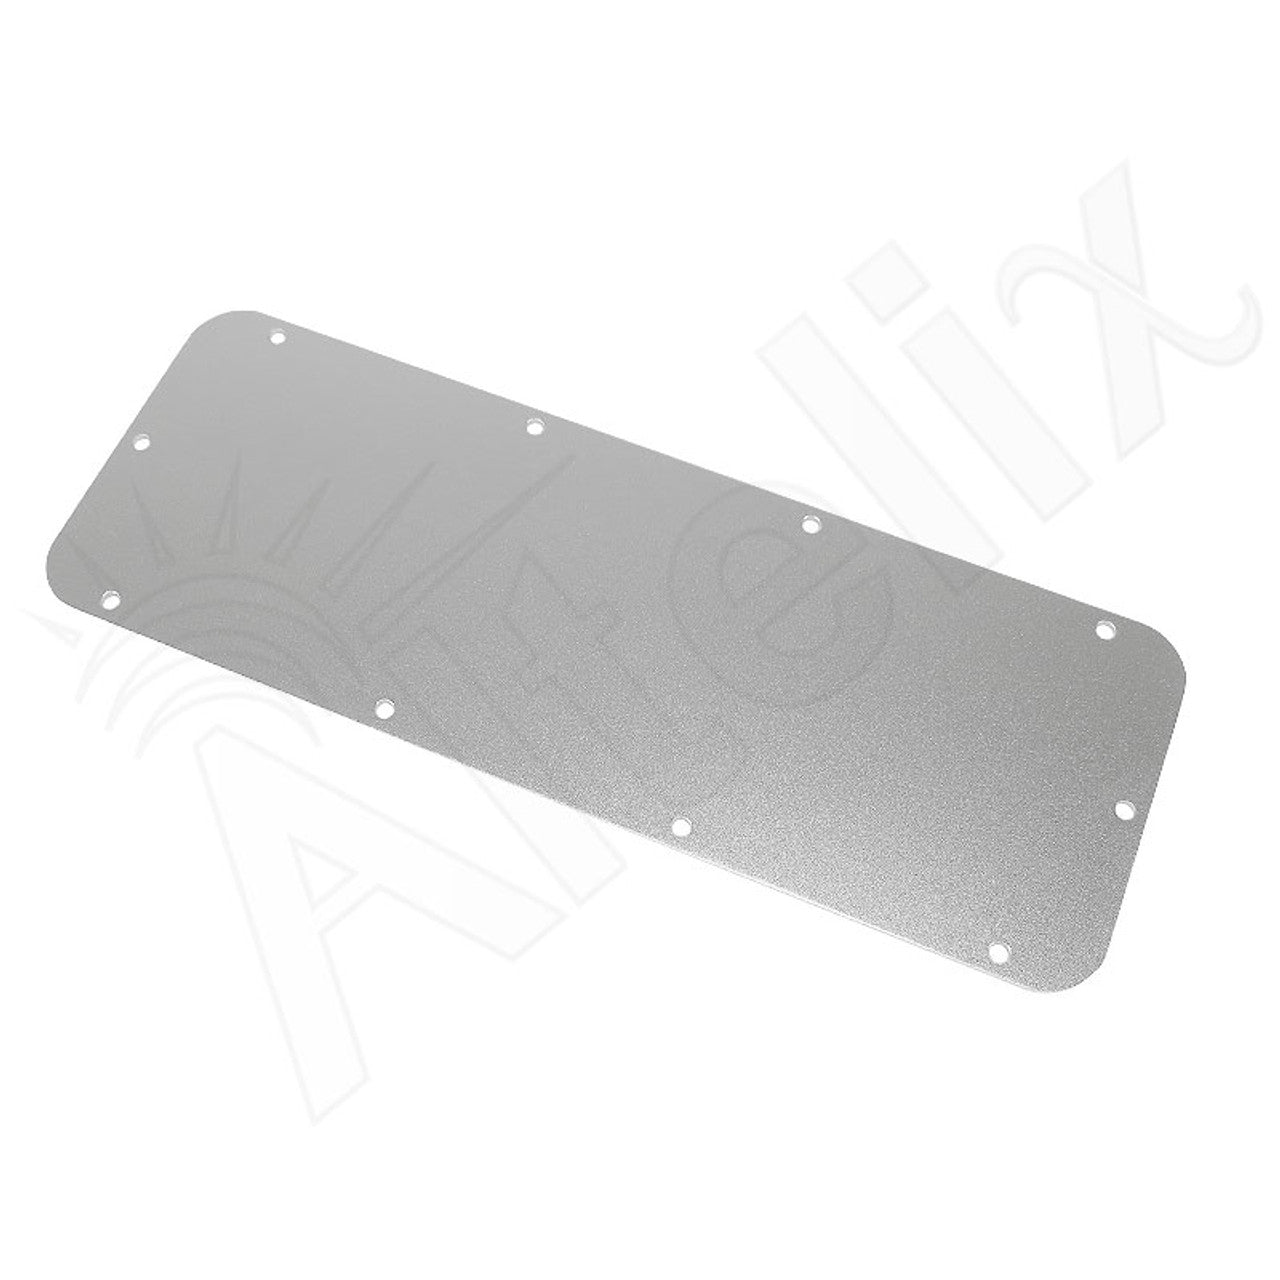 Blank Aluminum Access Panel for NS161608, NX161608, NS201612, NX201612 and NS241612 Enclosures-1